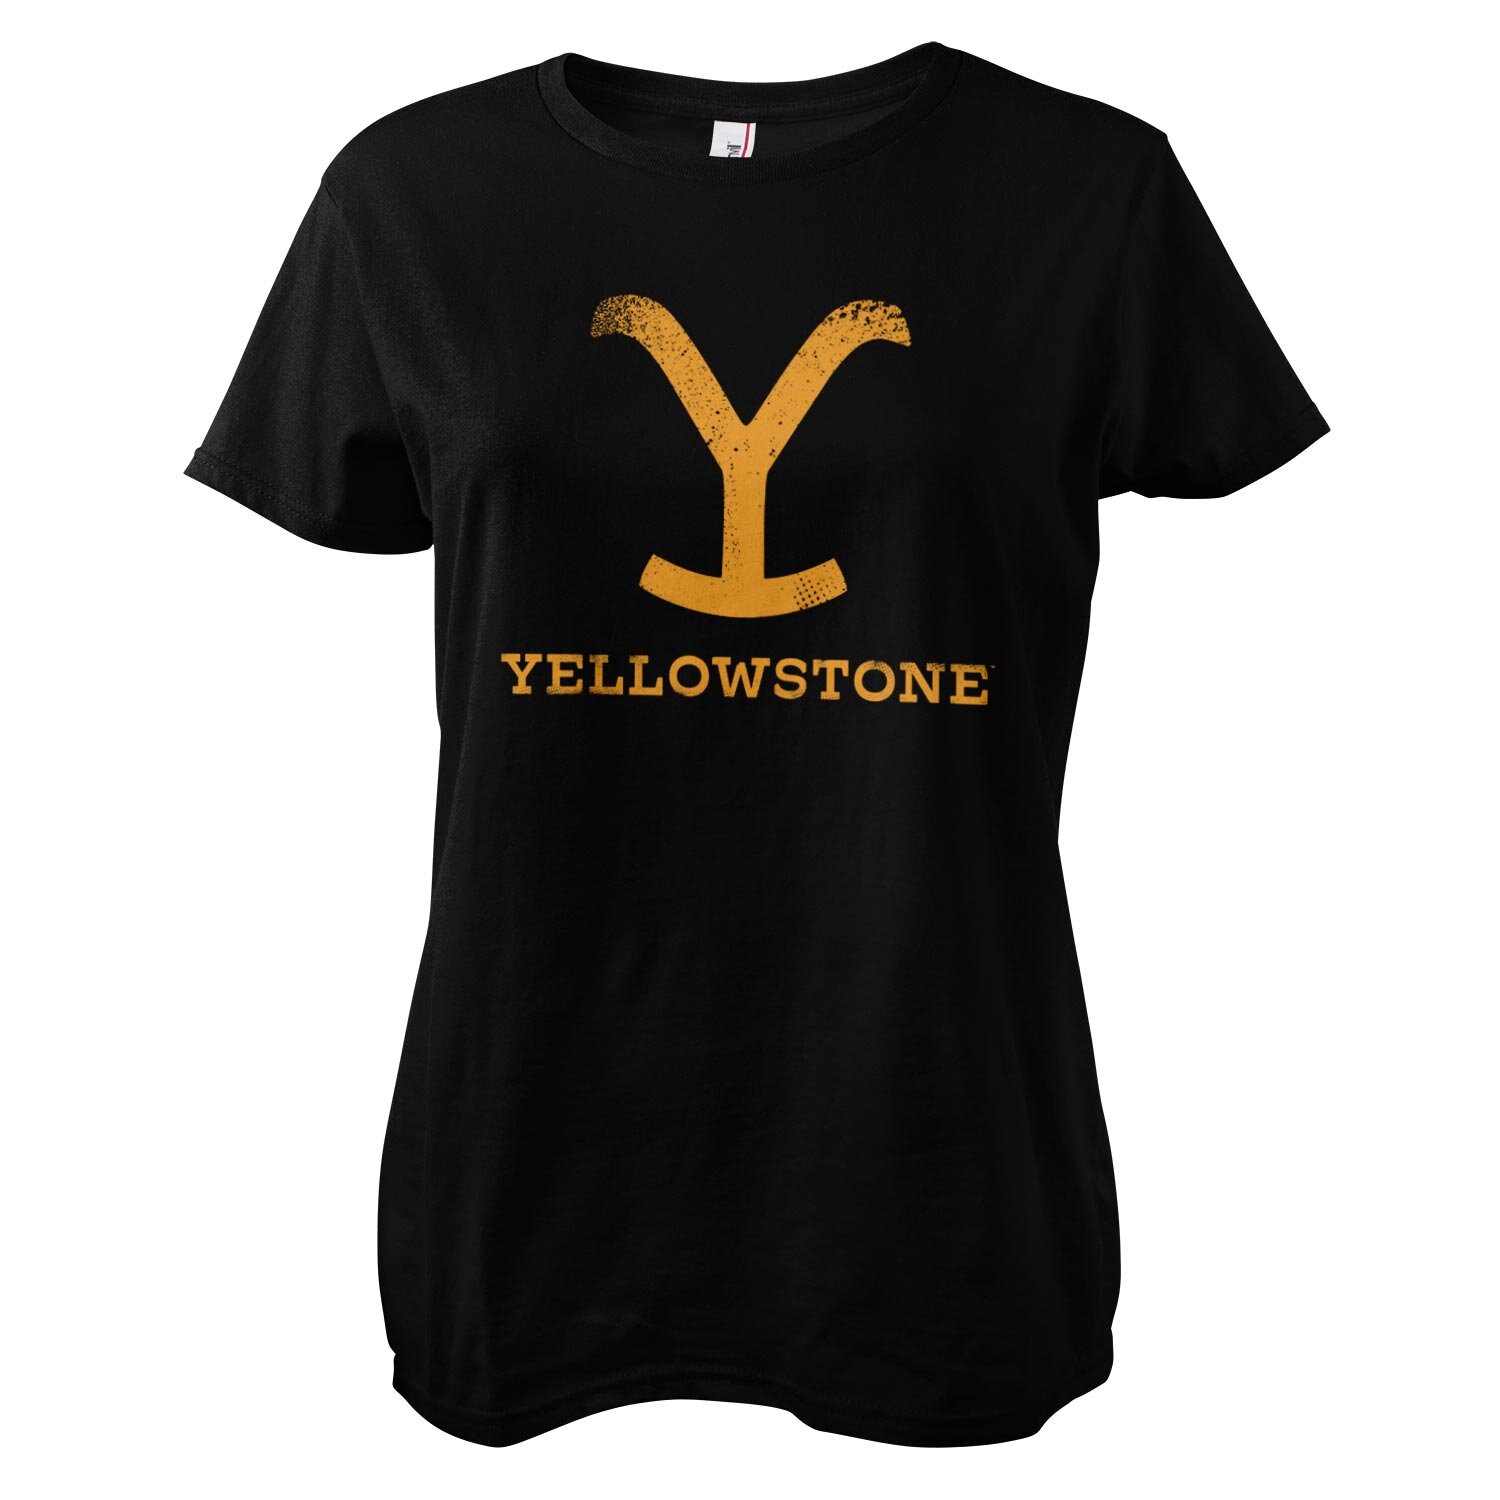 Yellowstone Girly Tee